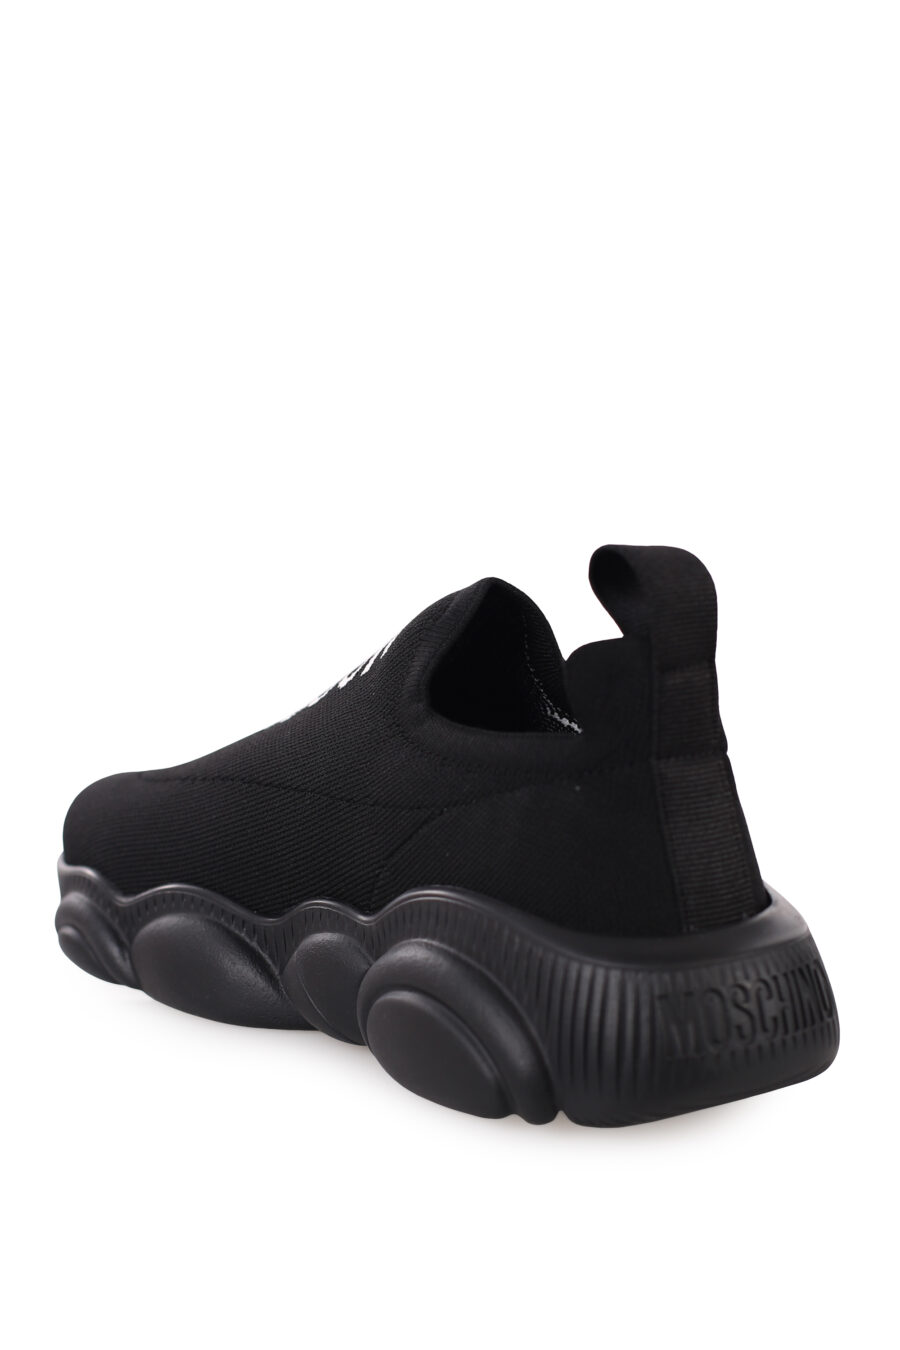 Zapatillas elásticas negras con logo blanco - IMG 0359